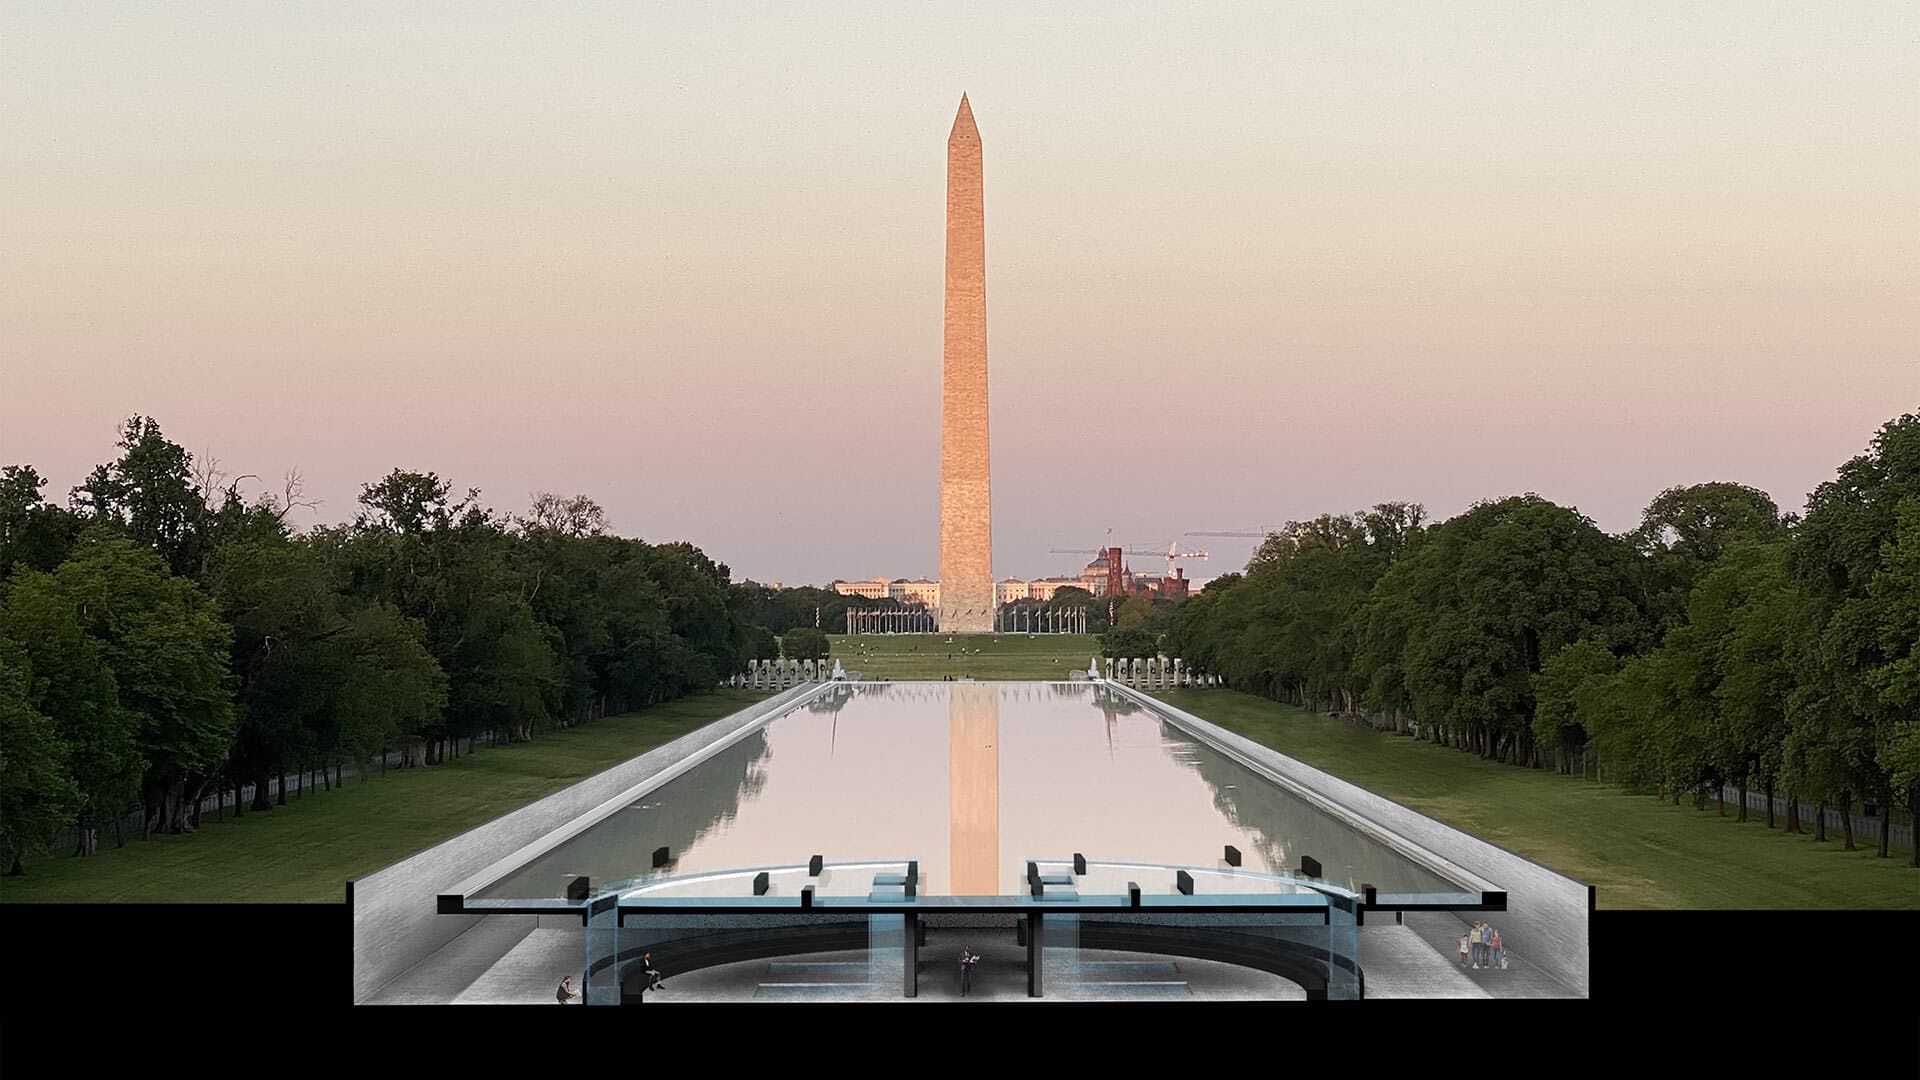 Washington Monument memorial